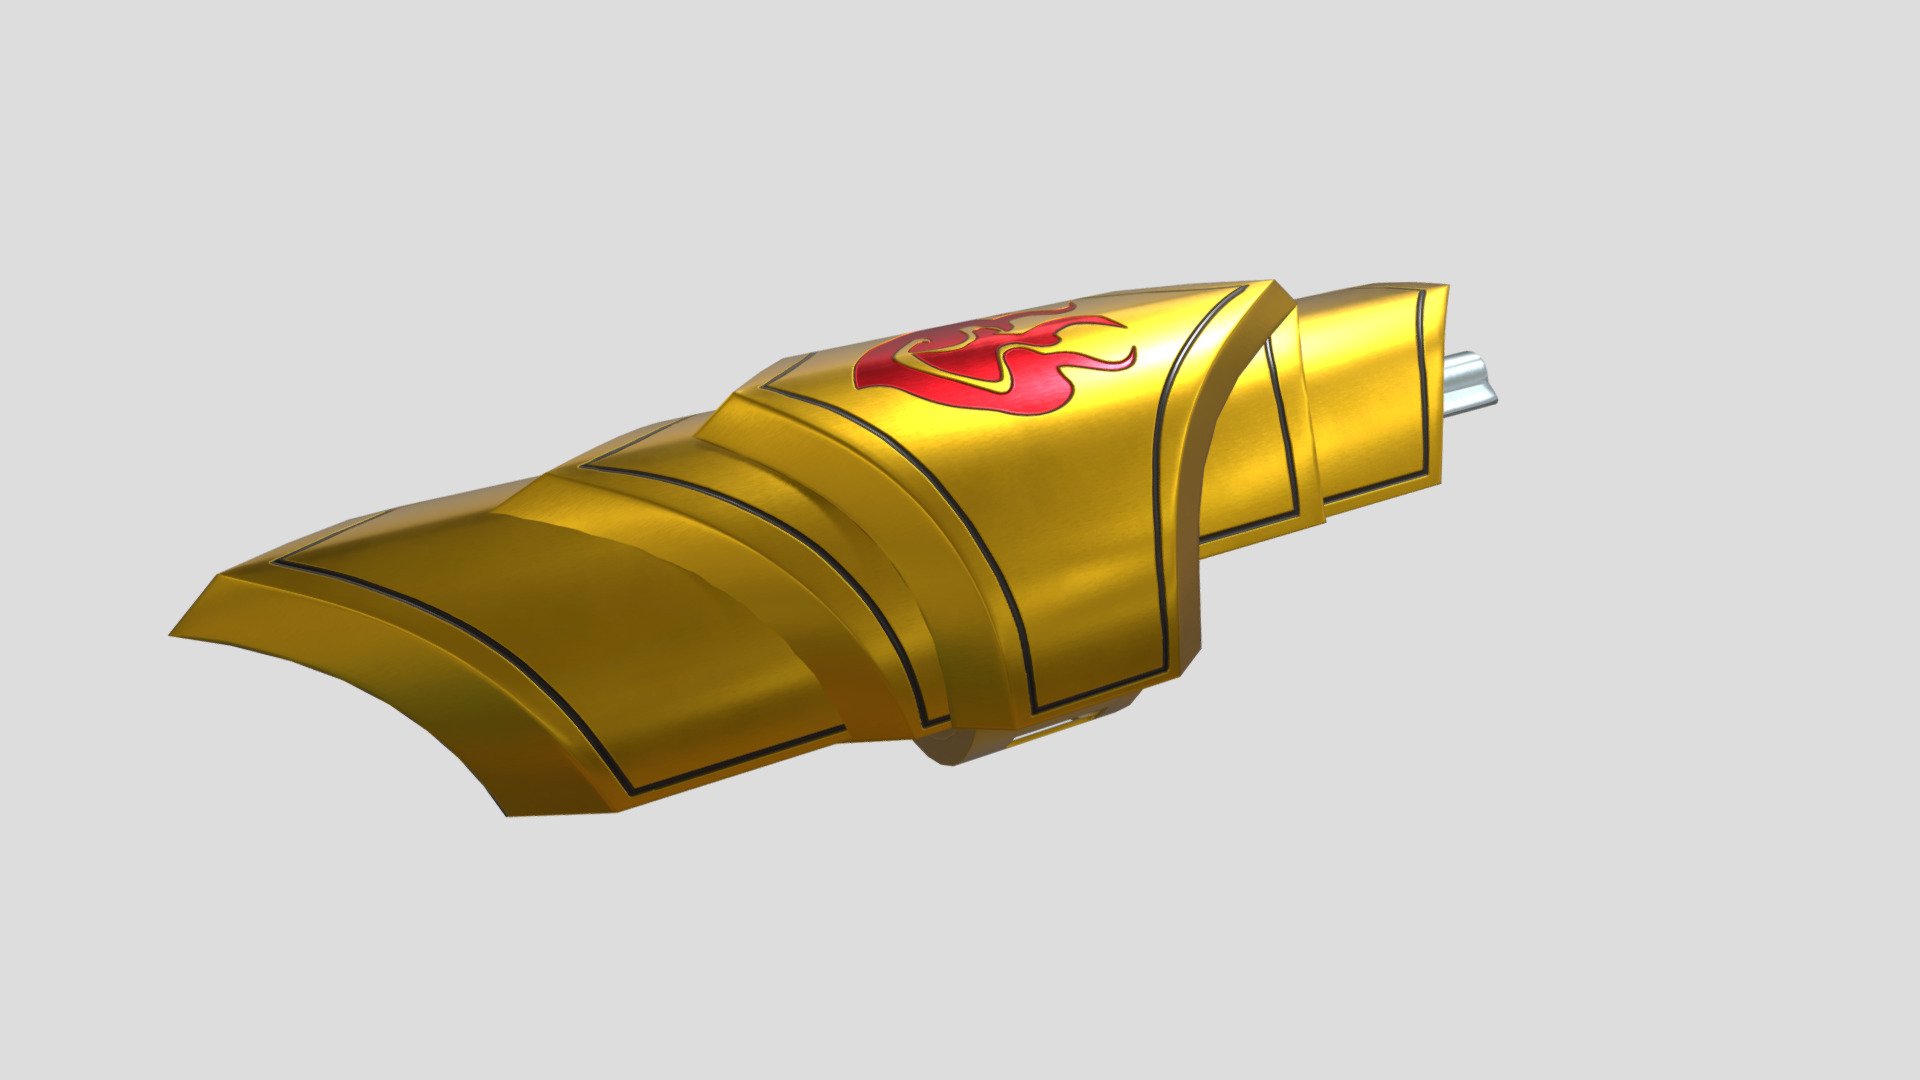 Yangs Weapon from the Rwby Series - Yang Ember Celika - 3D model by S91Rider (@S9123N) 3d model